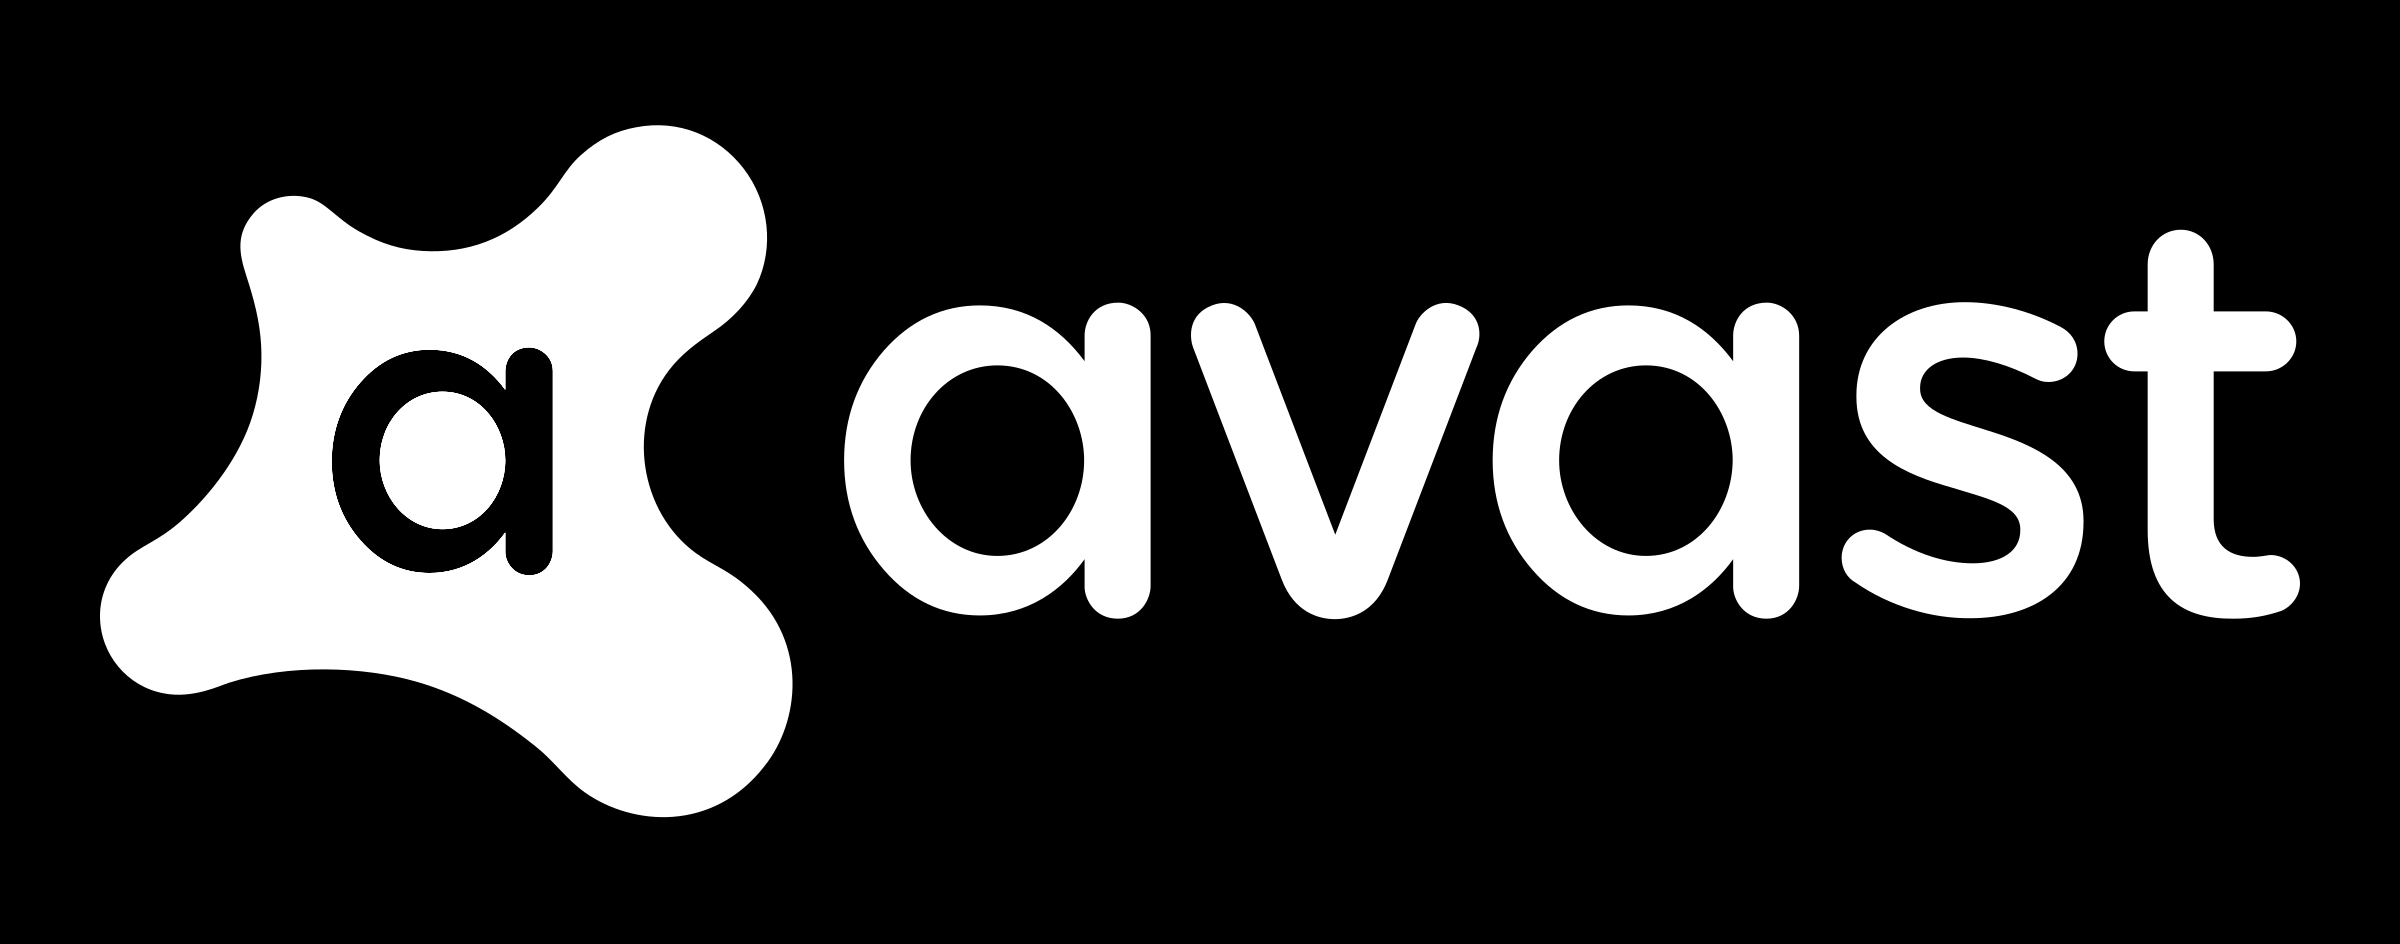 Avast Logo - Avast Logo PNG Transparent & SVG Vector - Freebie Supply